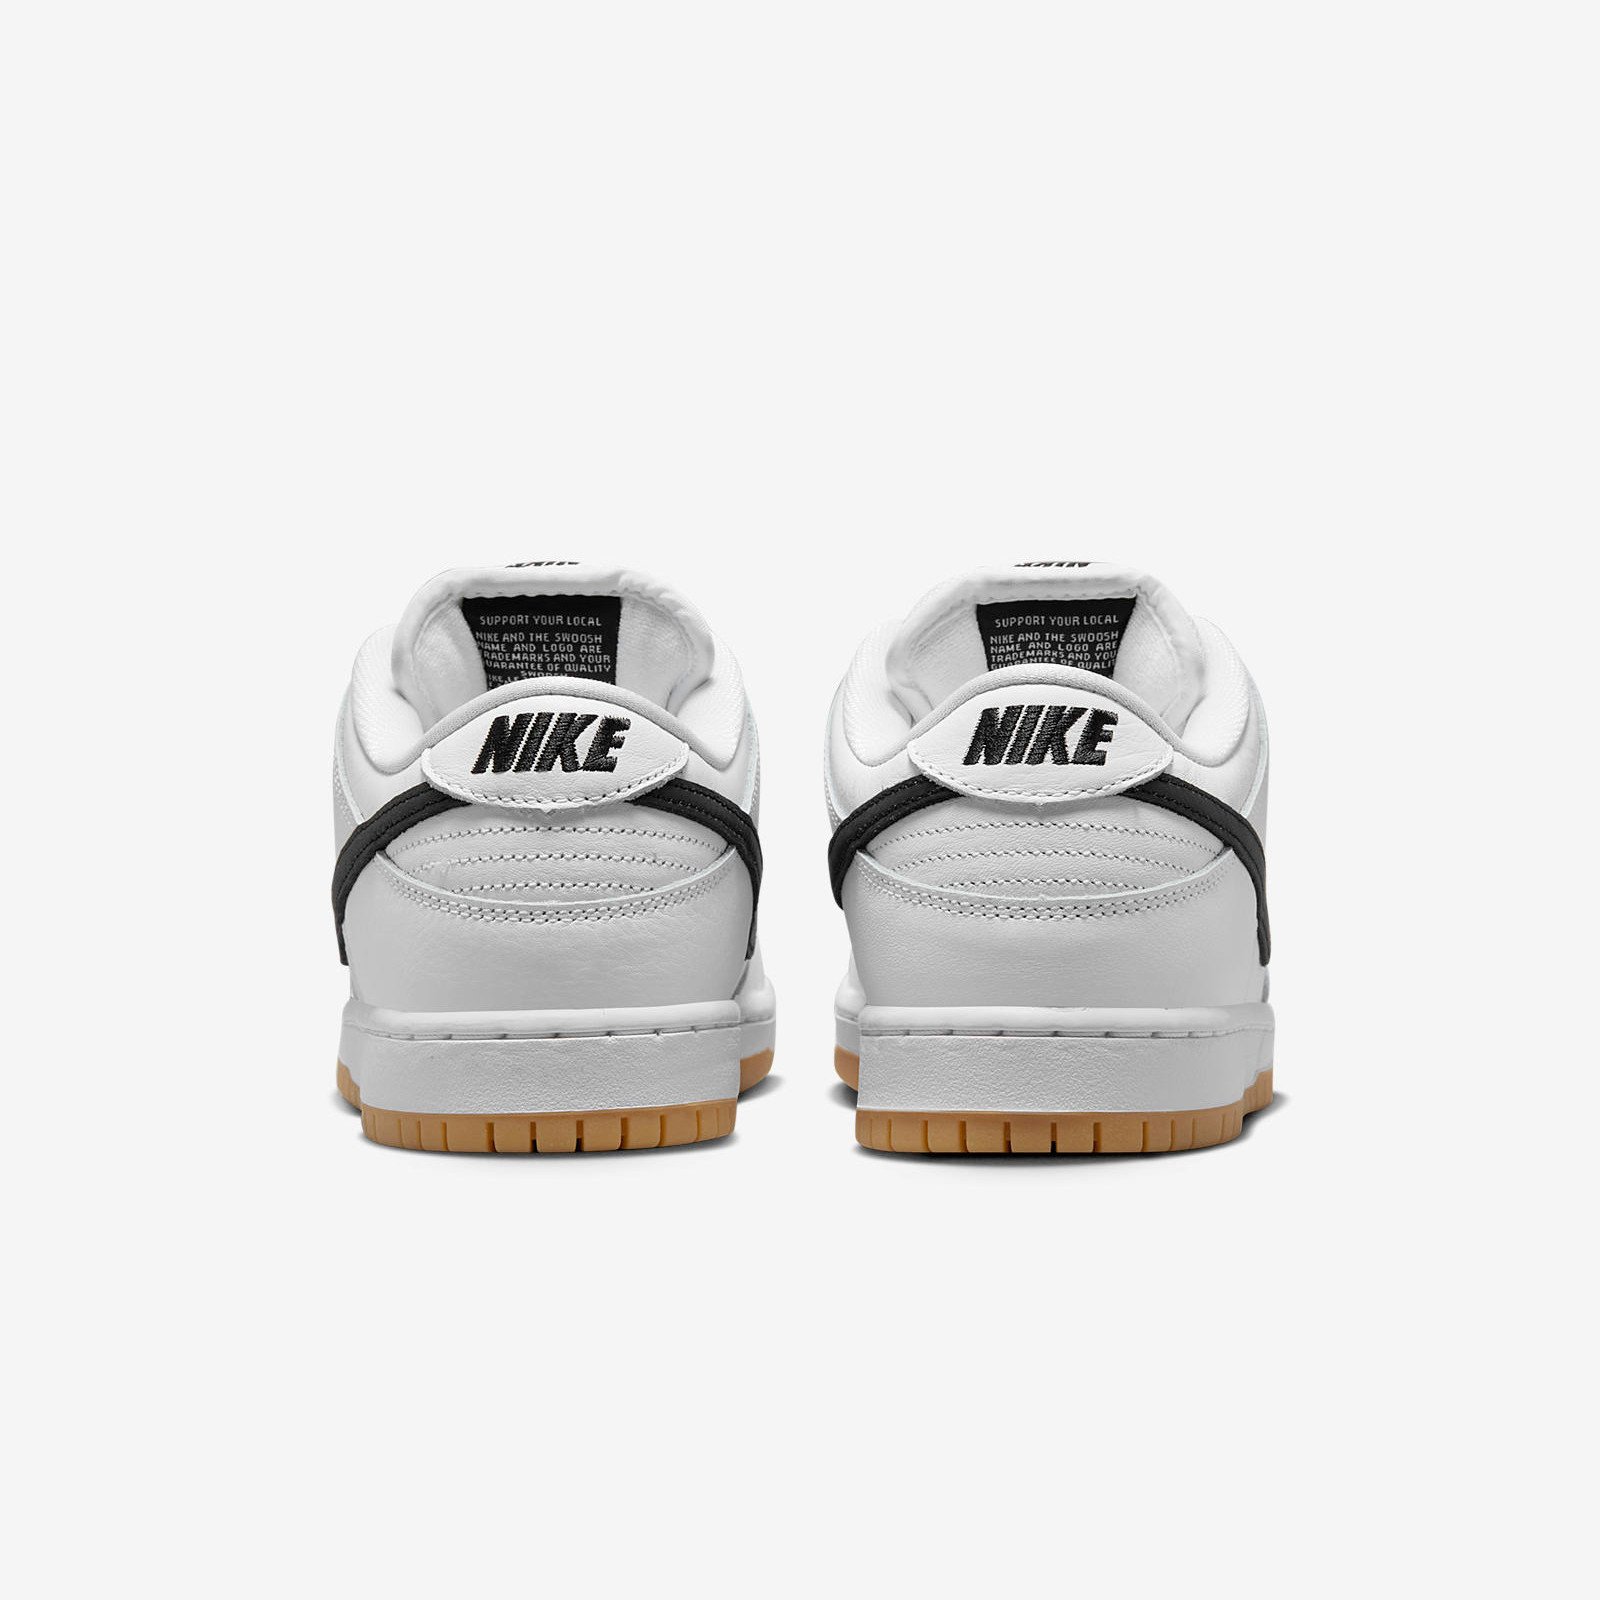 Nike SB Dunk Low
White / Gum Light Brown